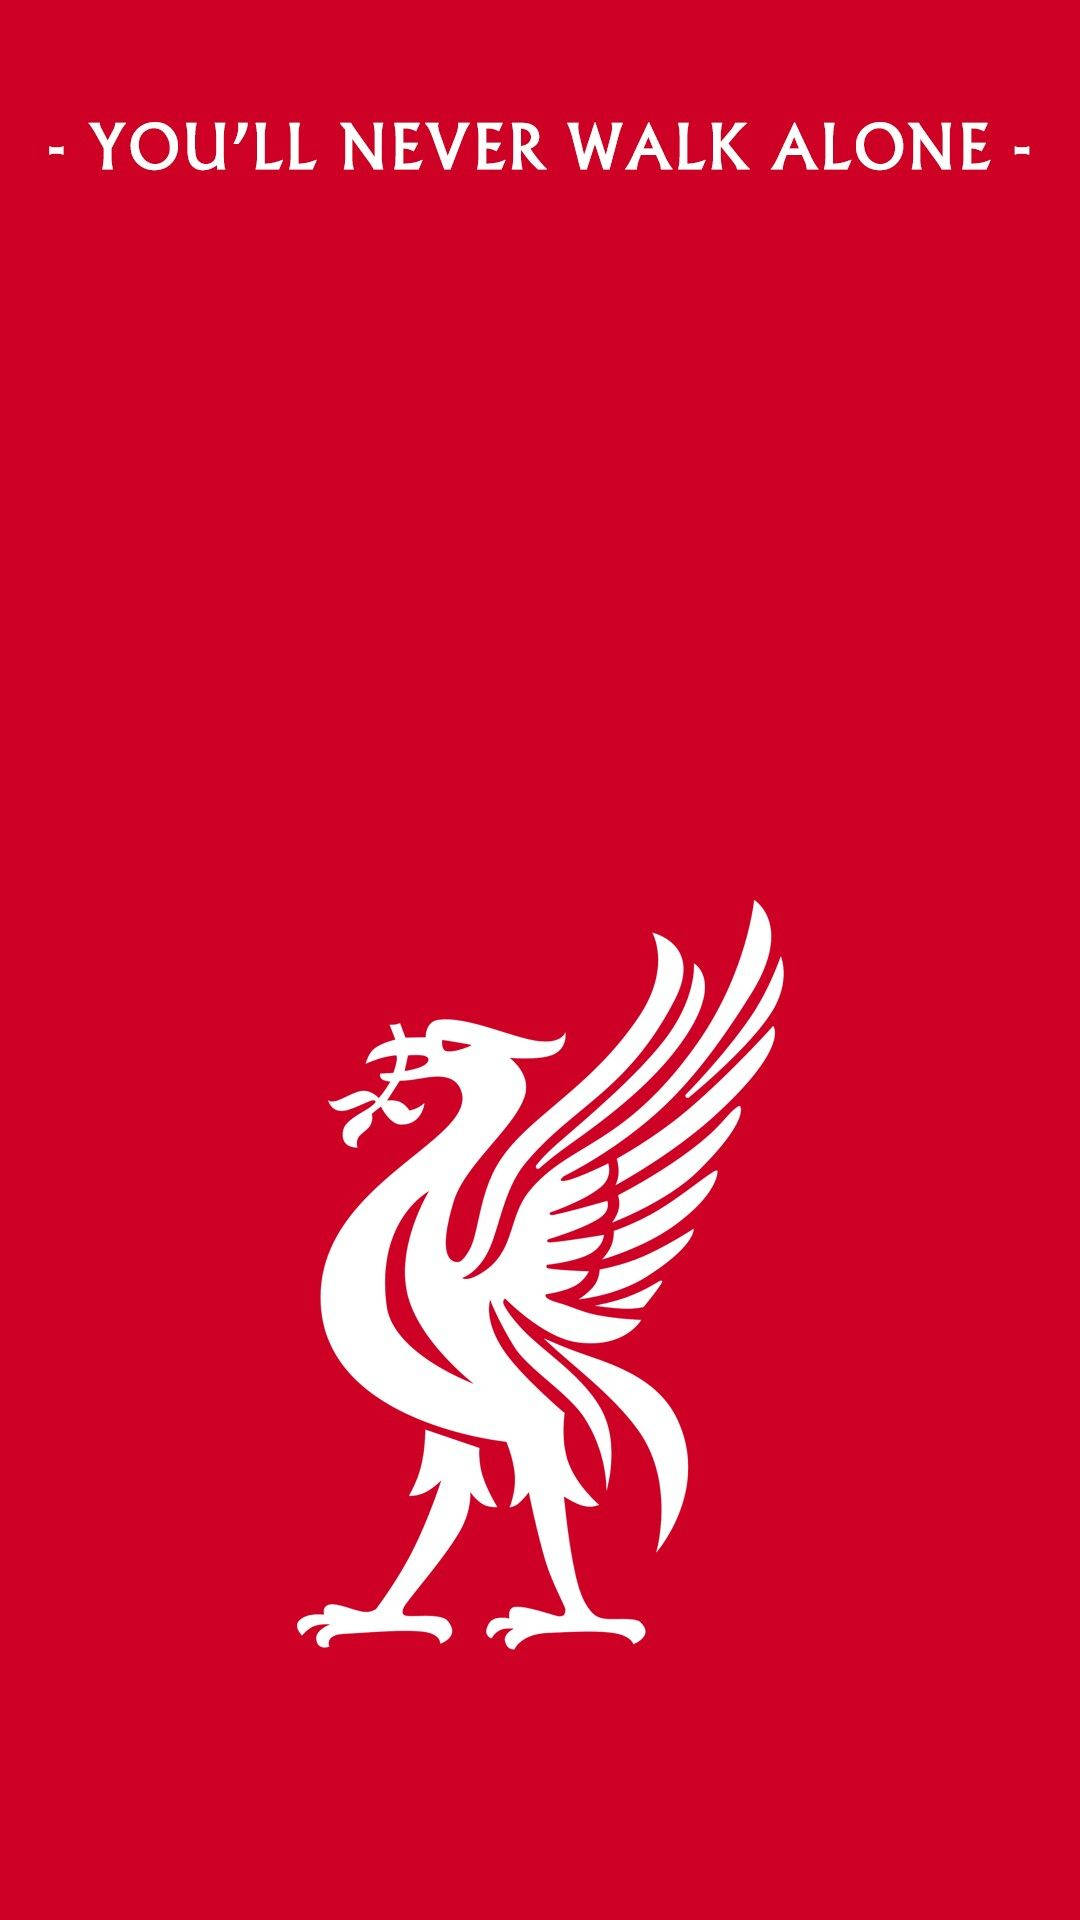 You'll Never Walk Alone Liverpool Fc